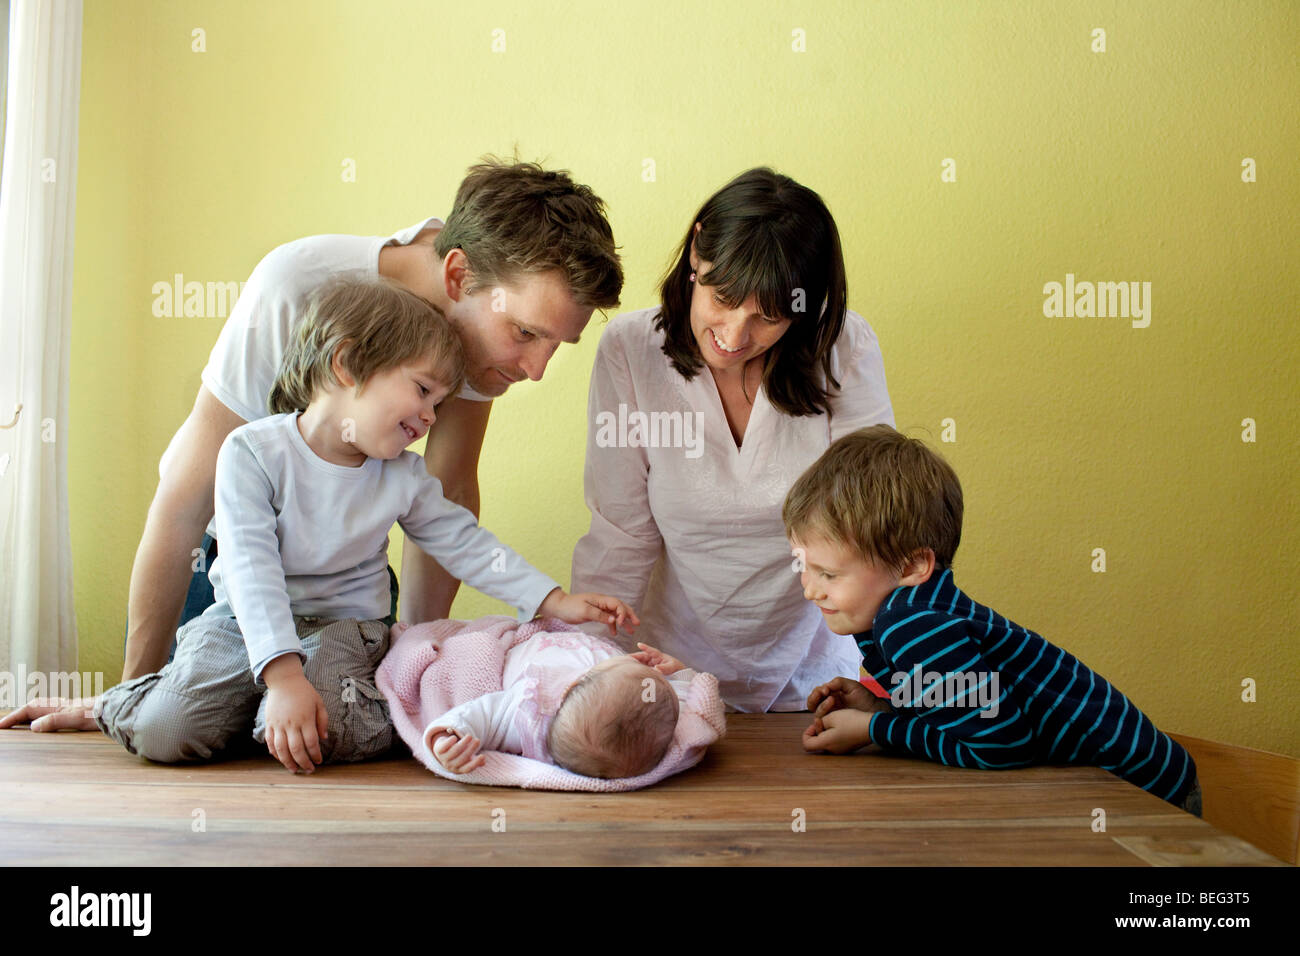 Family with three children Stock Photo